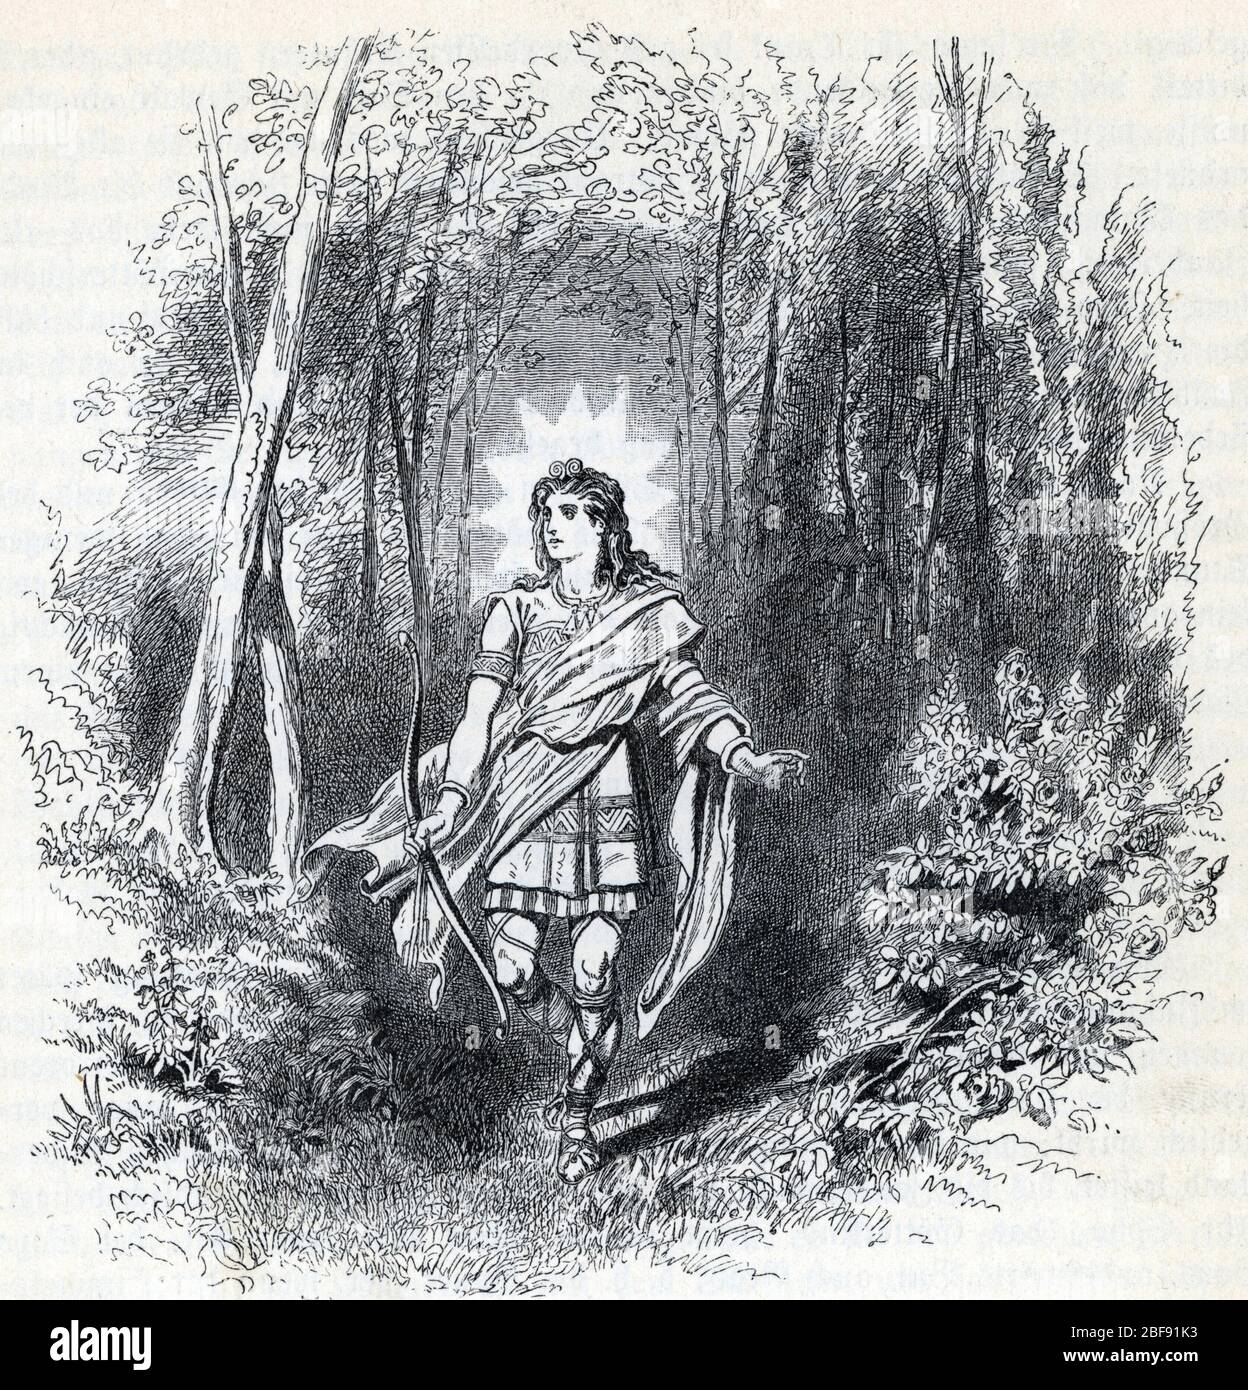 Mythologie nordique : Vali (Ali ou Wali) fils d'Odin (Norse mythology : Vali is a son of the god Odin and the giantess Rindr) Gravure tiree de 'Nordis Stock Photo